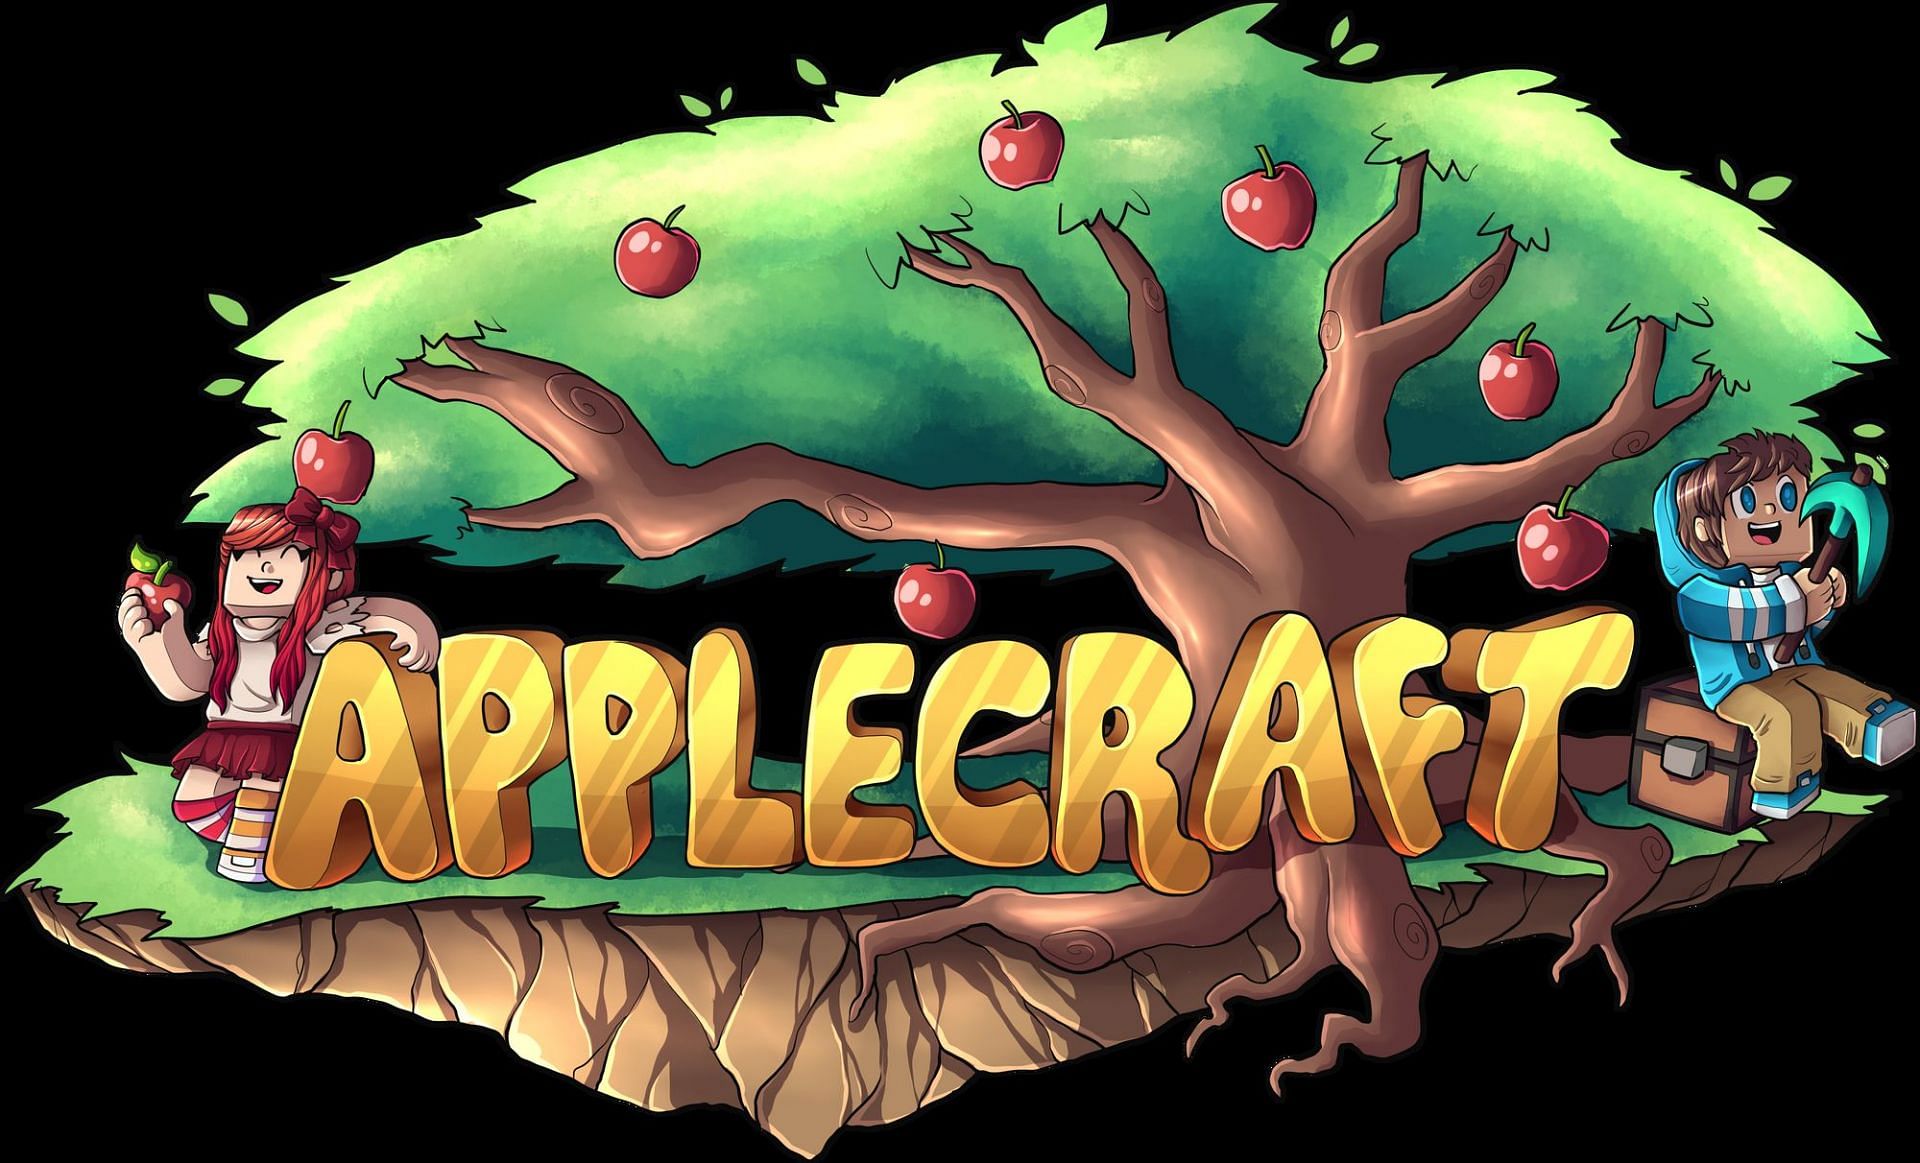 Applecraft&#039;s official logo (Image via Applecraft.org)